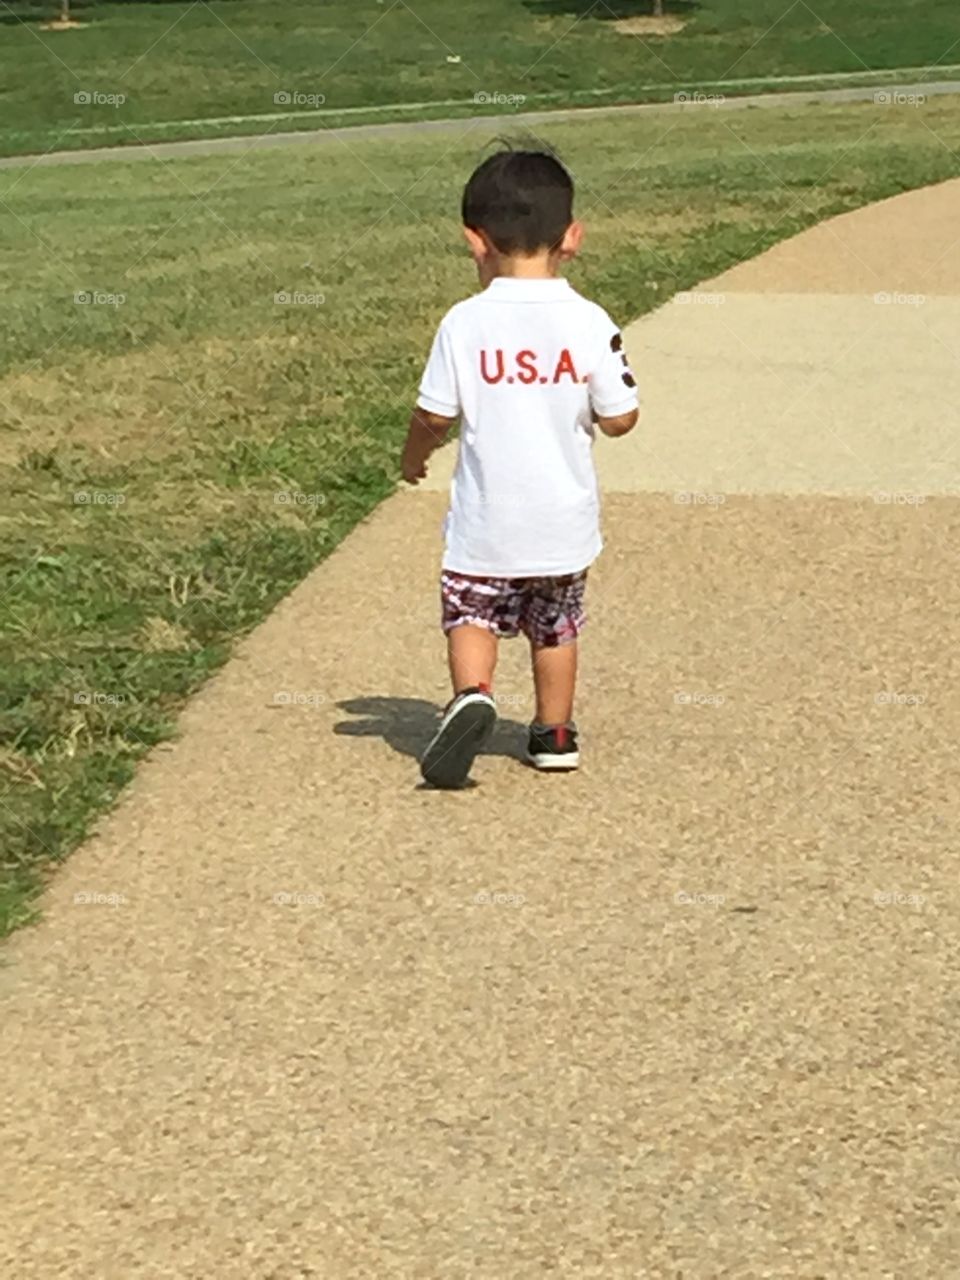 Young boy with USA shirt